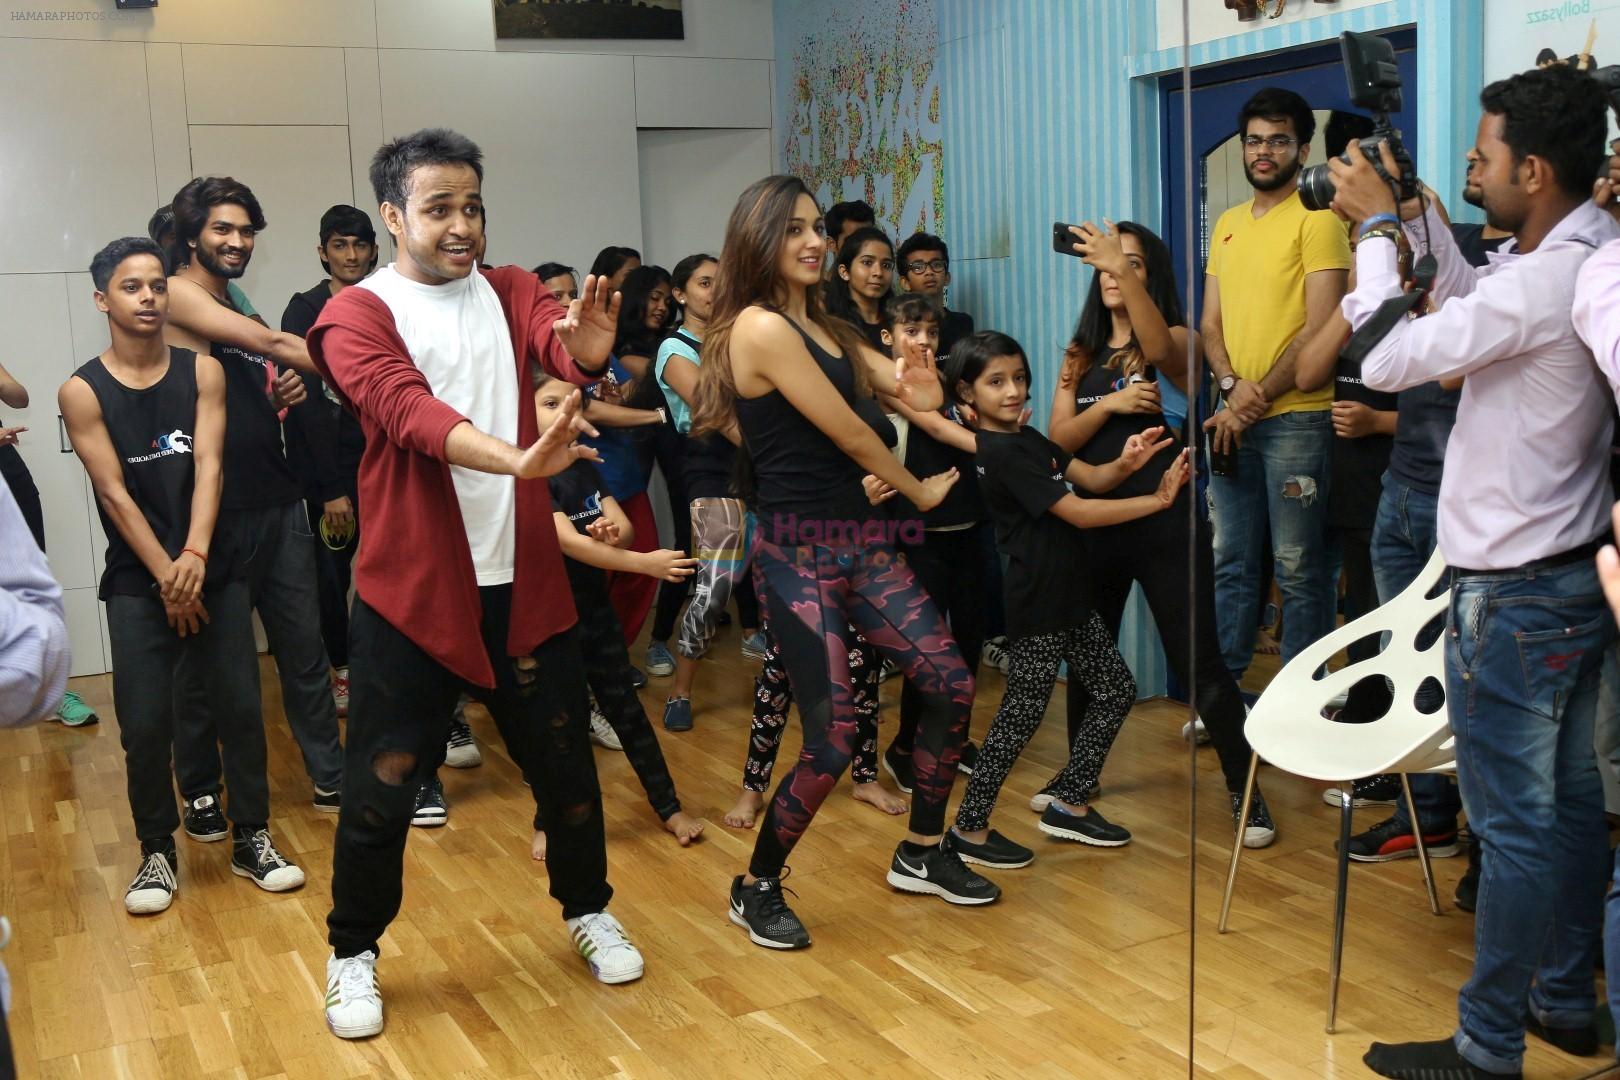 Kiara Advani Groove And Shake A Leg On The Song Of Tu Cheez Badi Hai Mast Mast